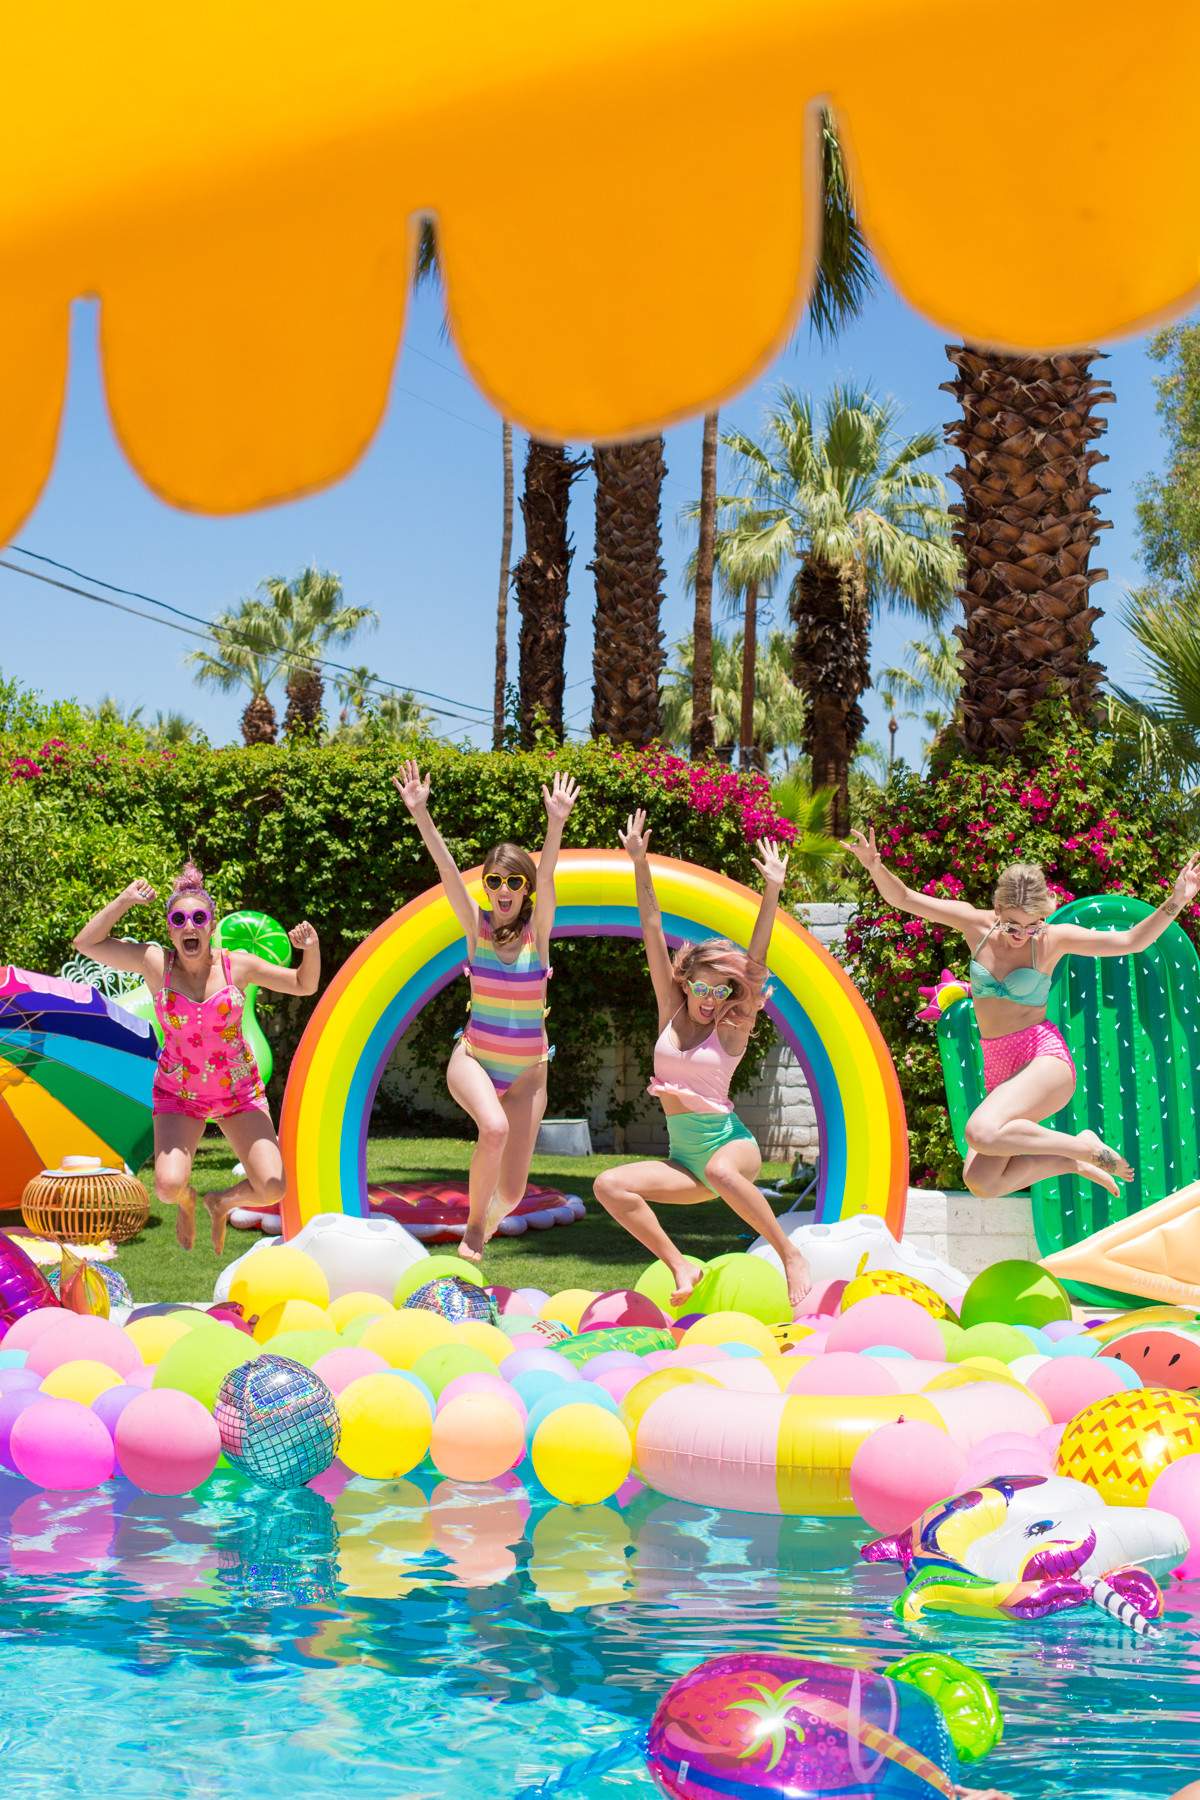 Swimming Pool Party Ideas
 An Epic Rainbow Balloon Pool Party Studio DIY